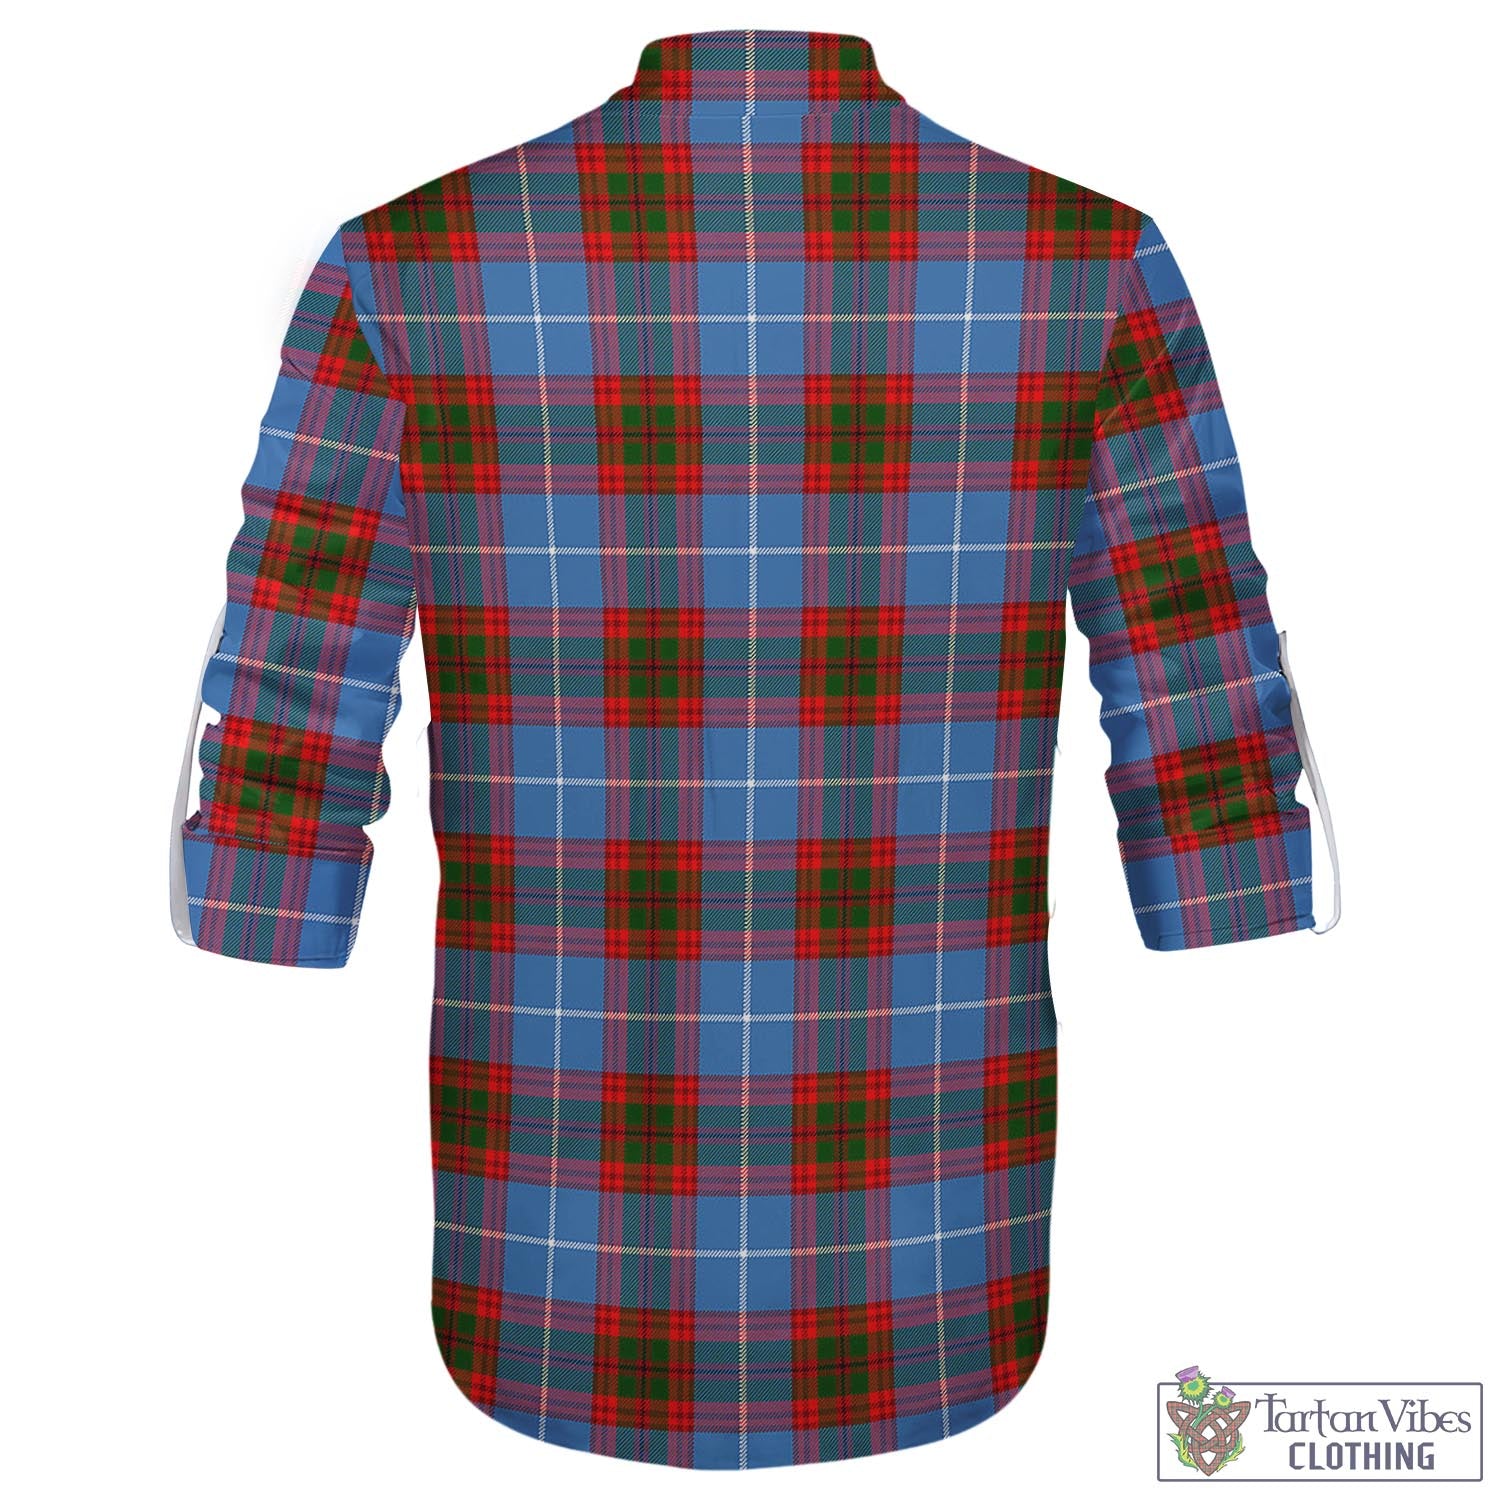 Tartan Vibes Clothing Pennycook Tartan Men's Scottish Traditional Jacobite Ghillie Kilt Shirt